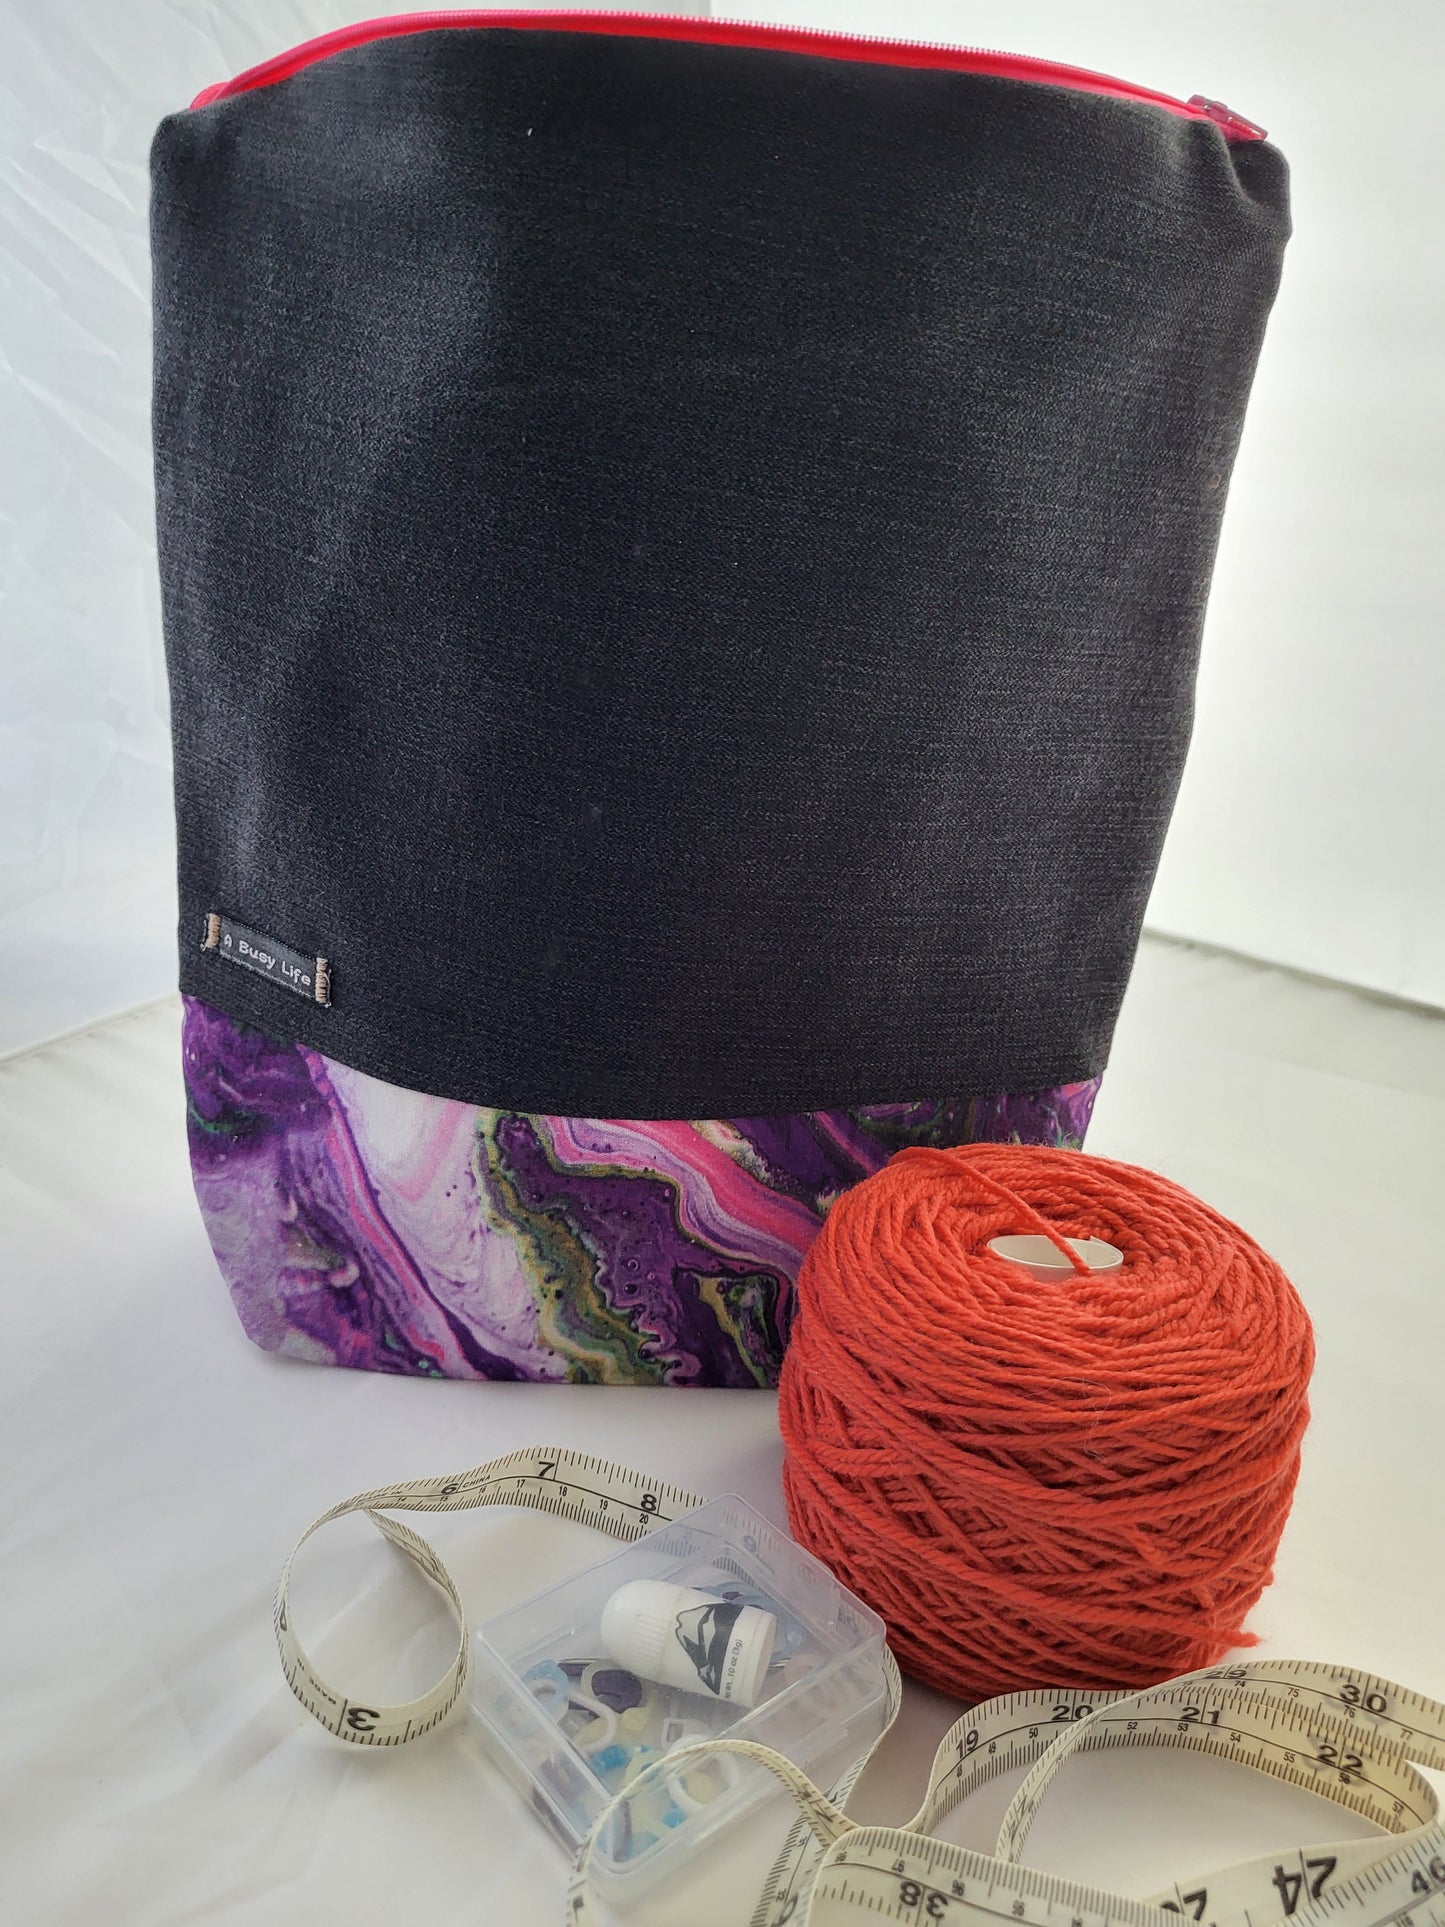 Black Denim and Groovy Celestial project bag, Zippered Project Bag,  project bag,  Storage bag